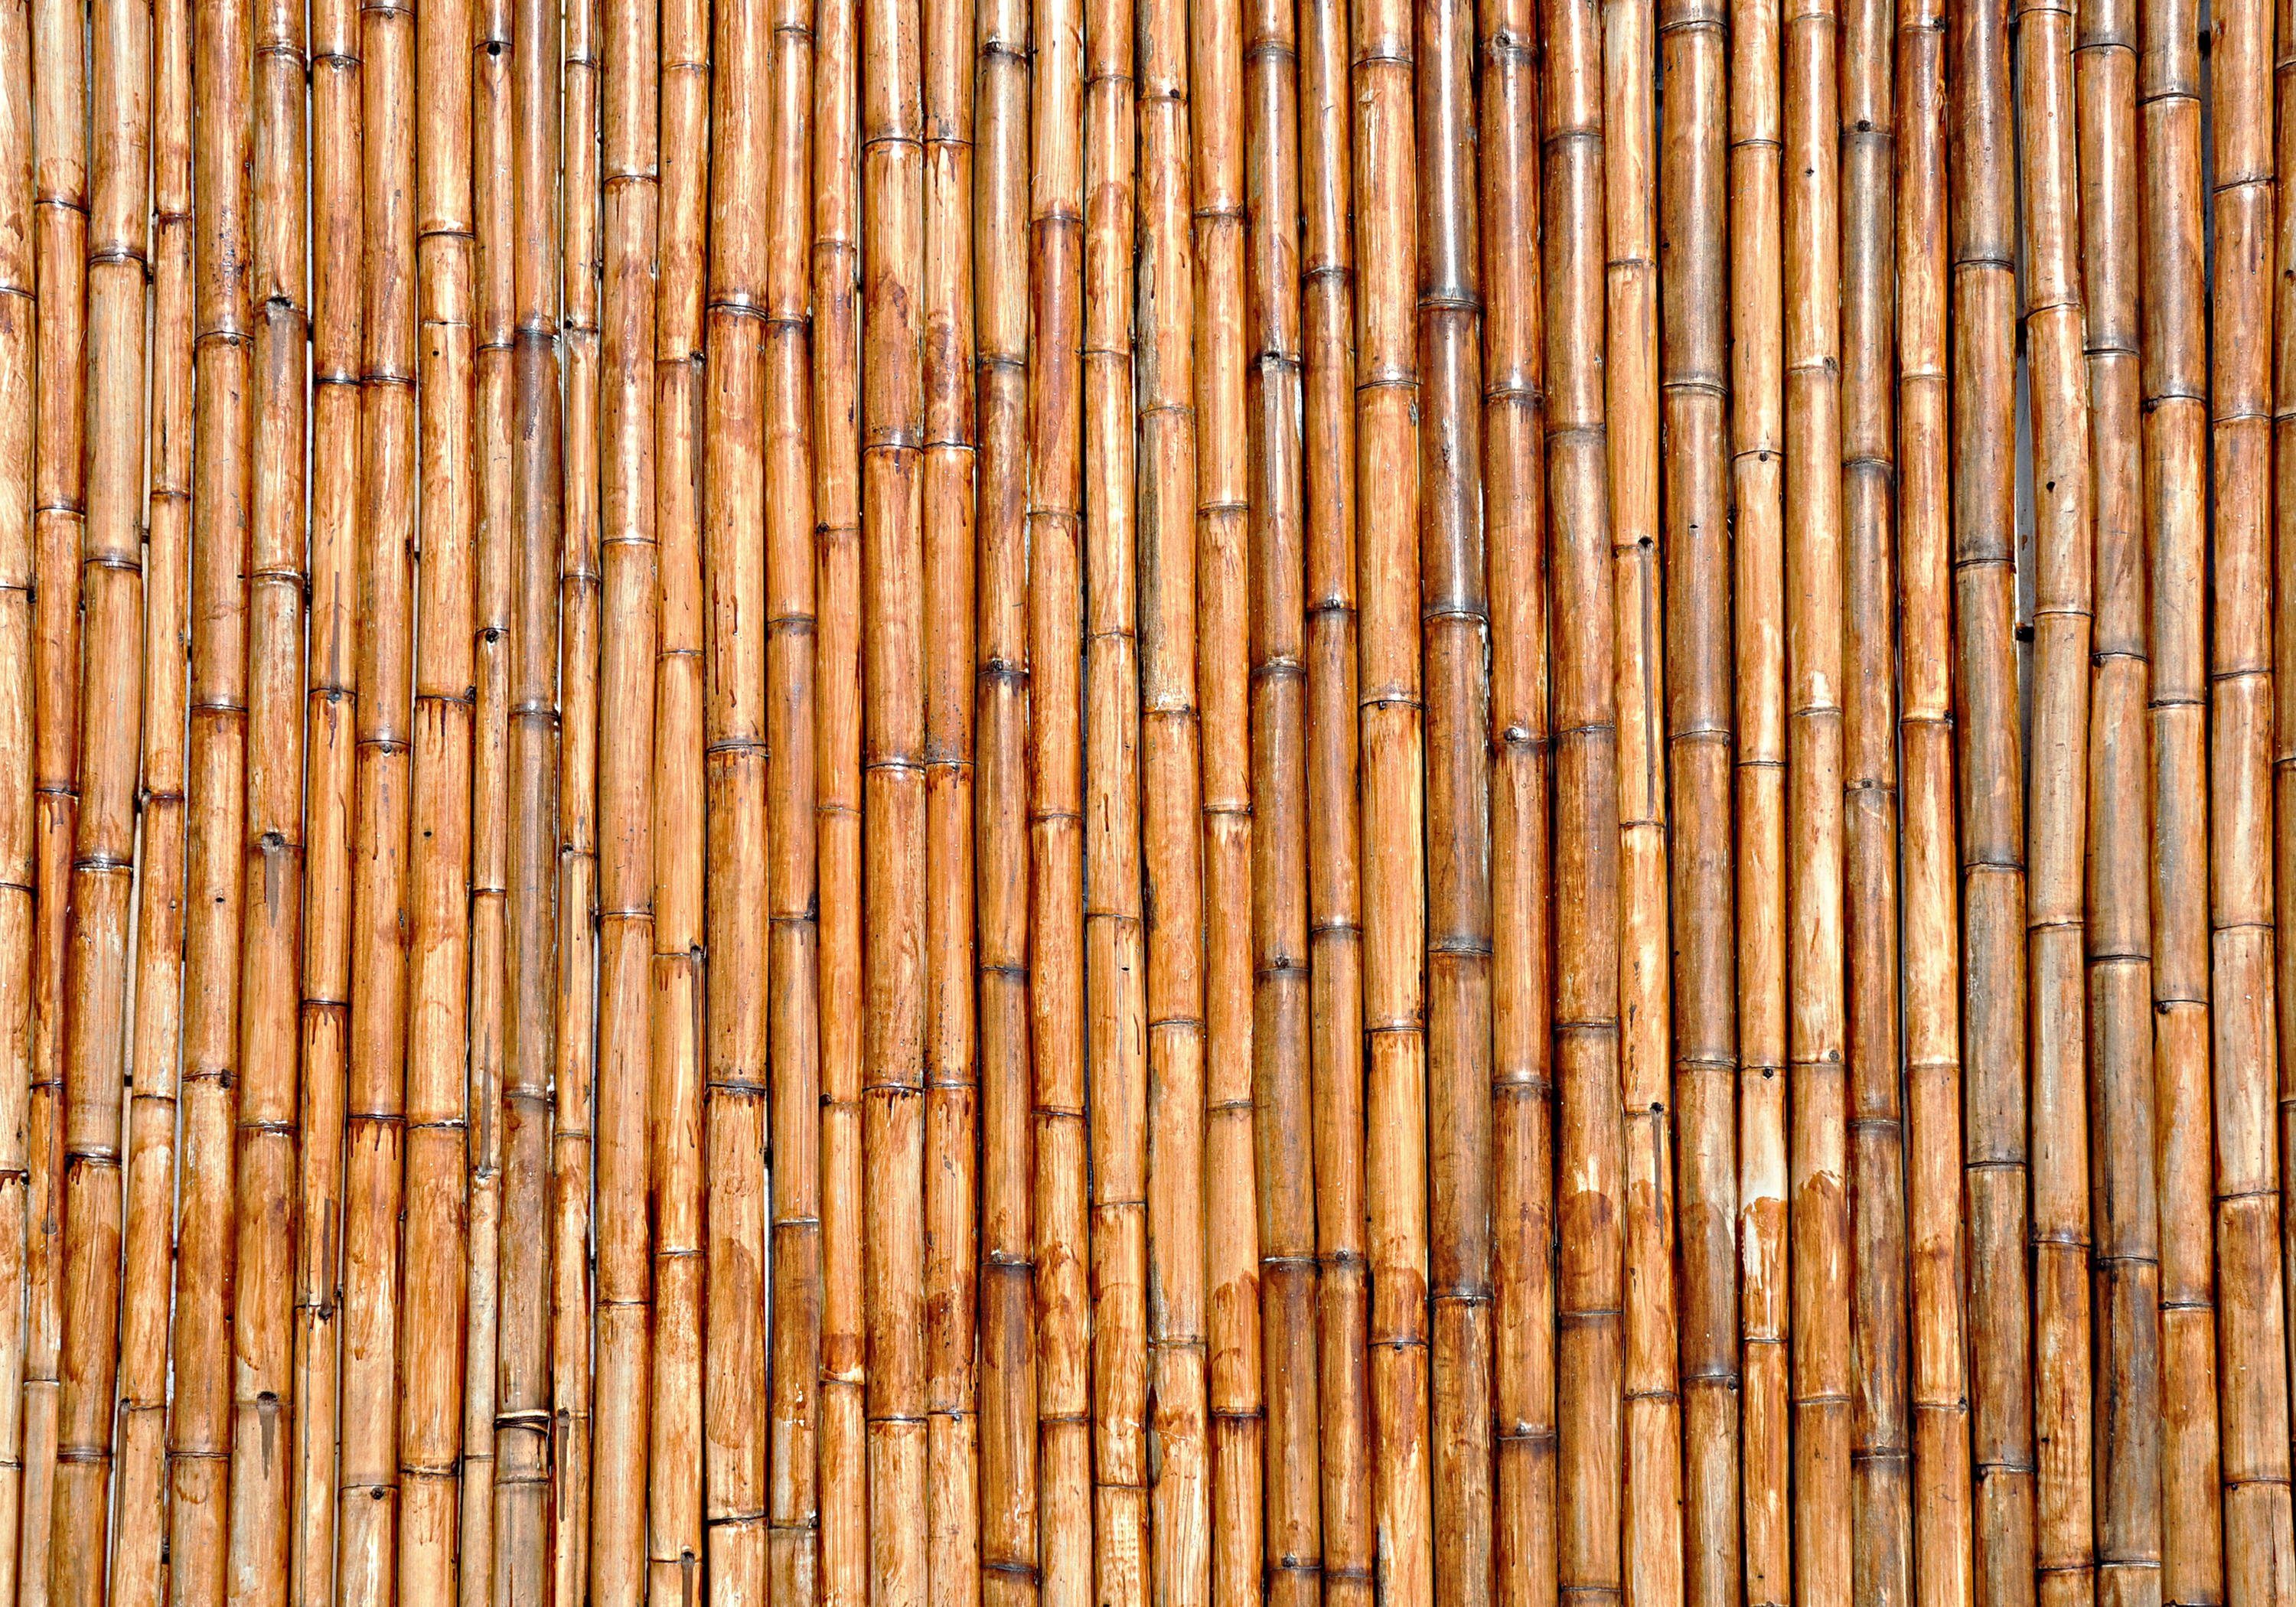 wandmotiv24 Fototapete Bambus Holz Natur, Vliestapete Motivtapete, Wandtapete, glatt, matt